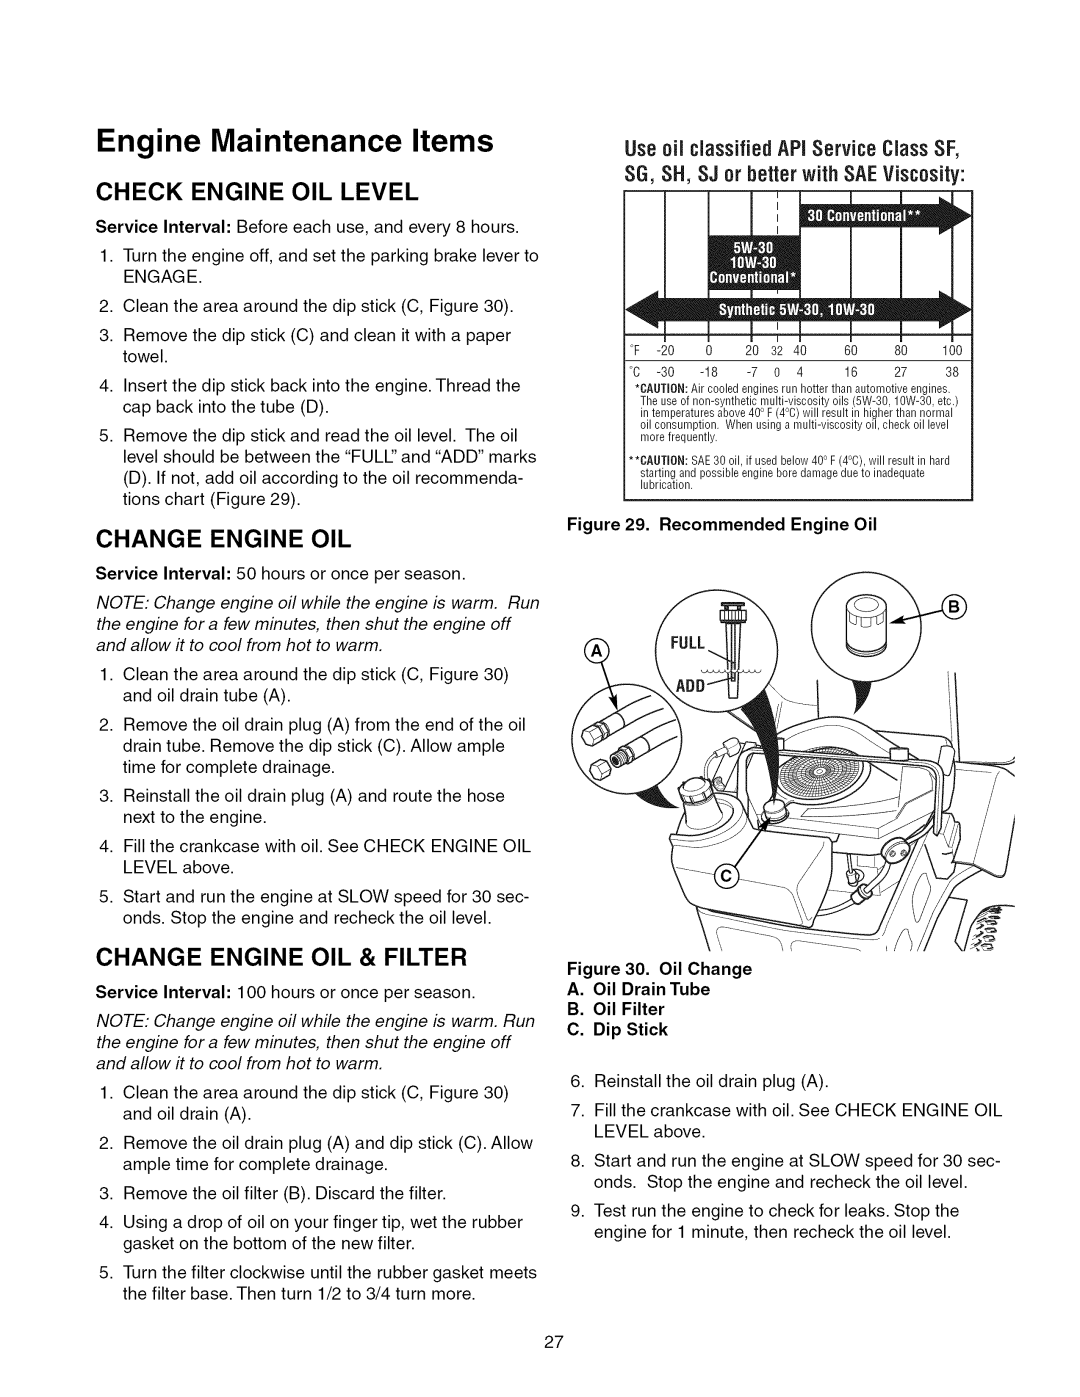 Craftsman ZTS 6000, 107.289860 manual Engine Maintenance Items, Check Engine Oil Level, Change Engine Oil & Filter 